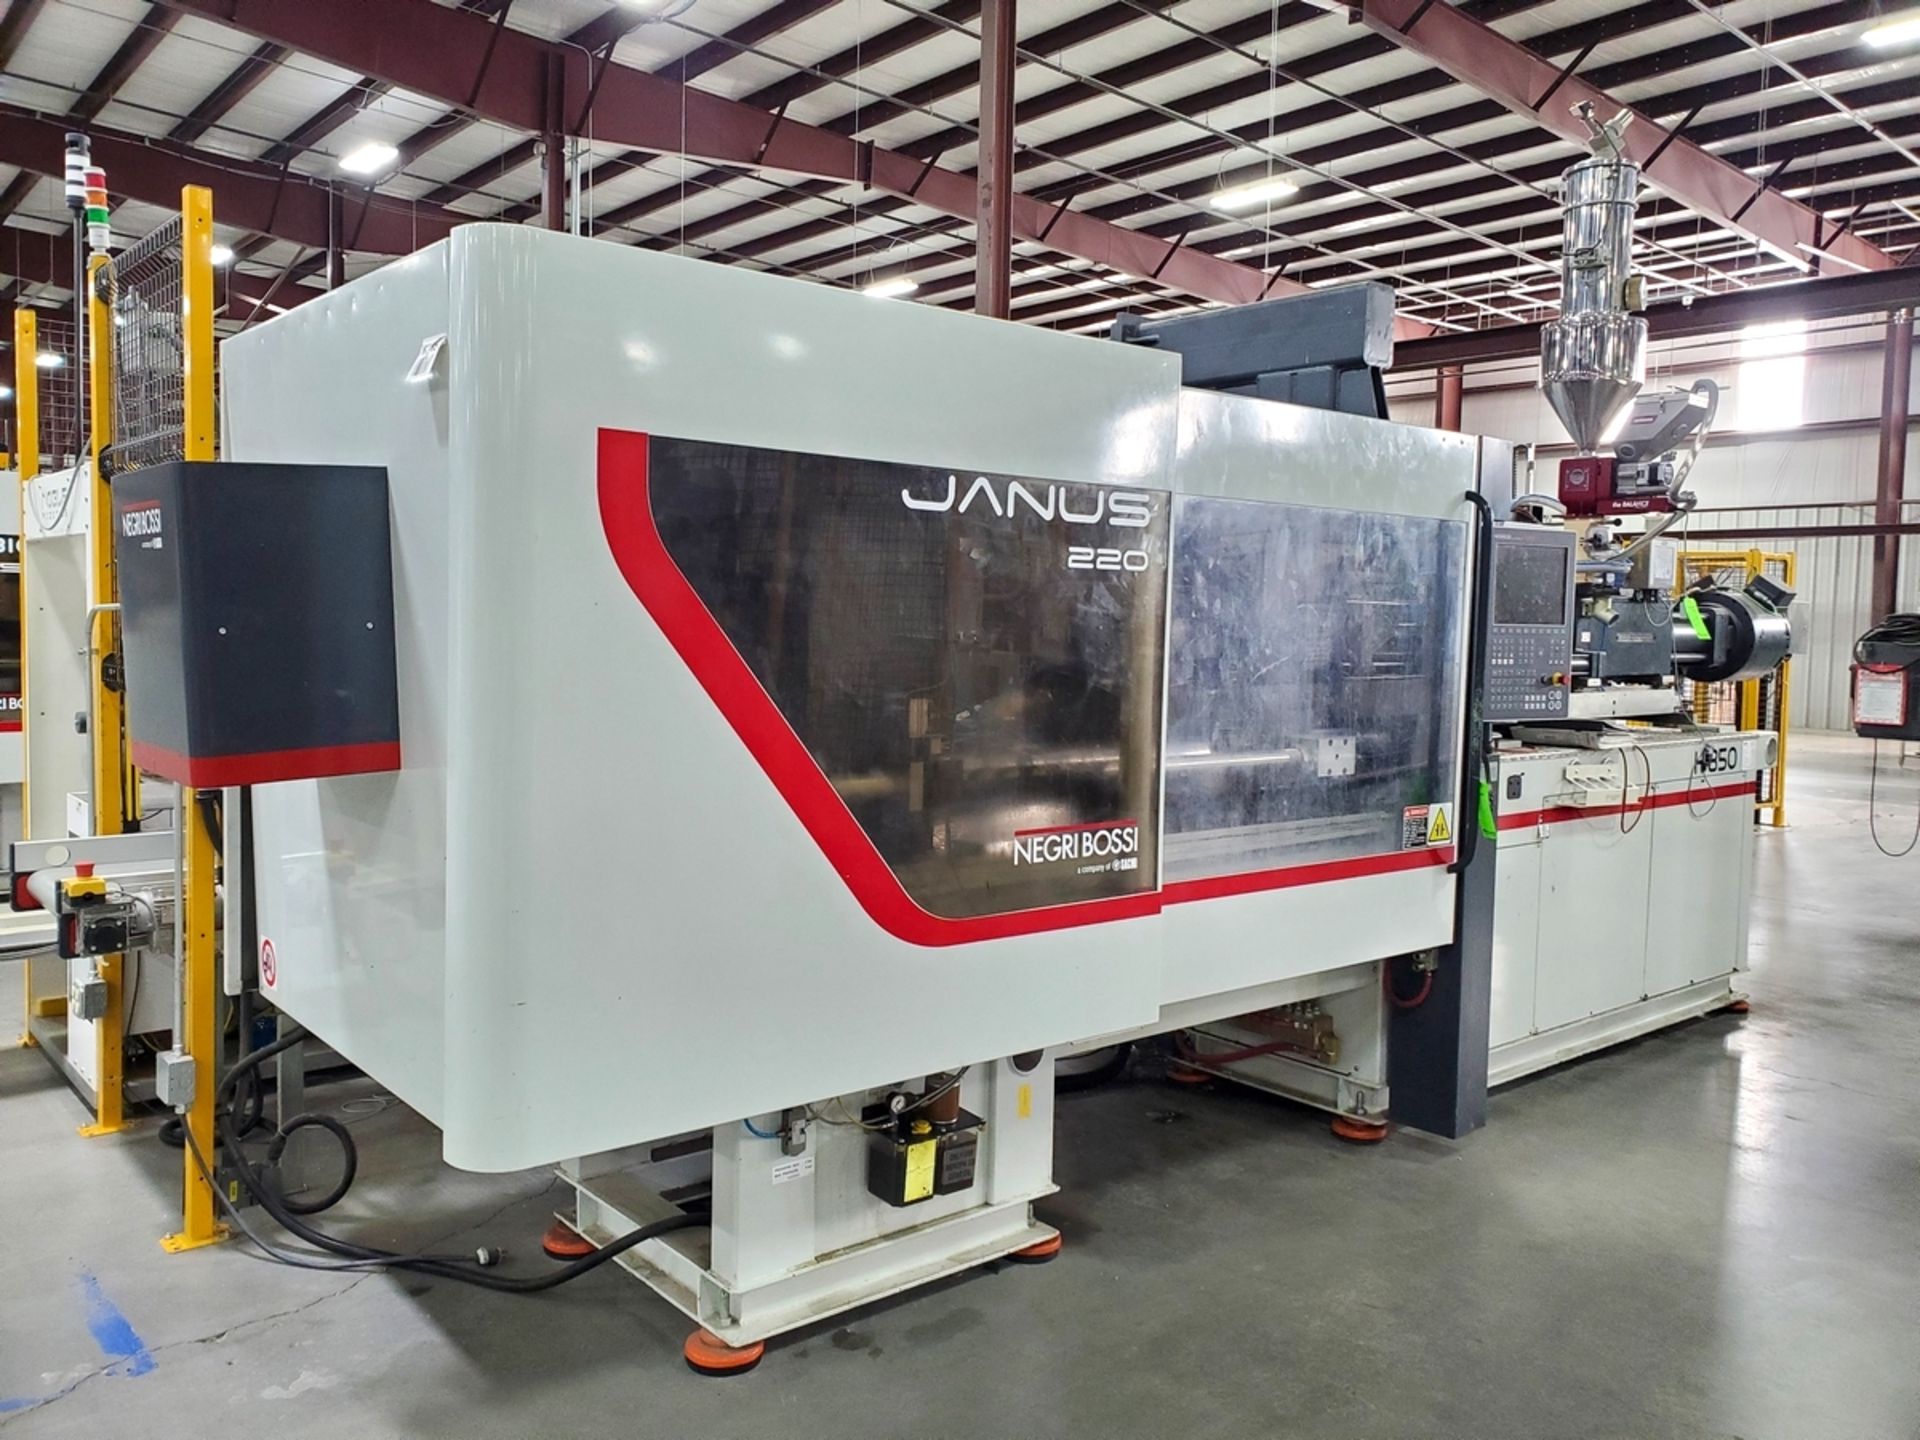 Negri Bossi Janus 220, 220 Ton Injection Molding Machine, New in 2017 - Image 2 of 13